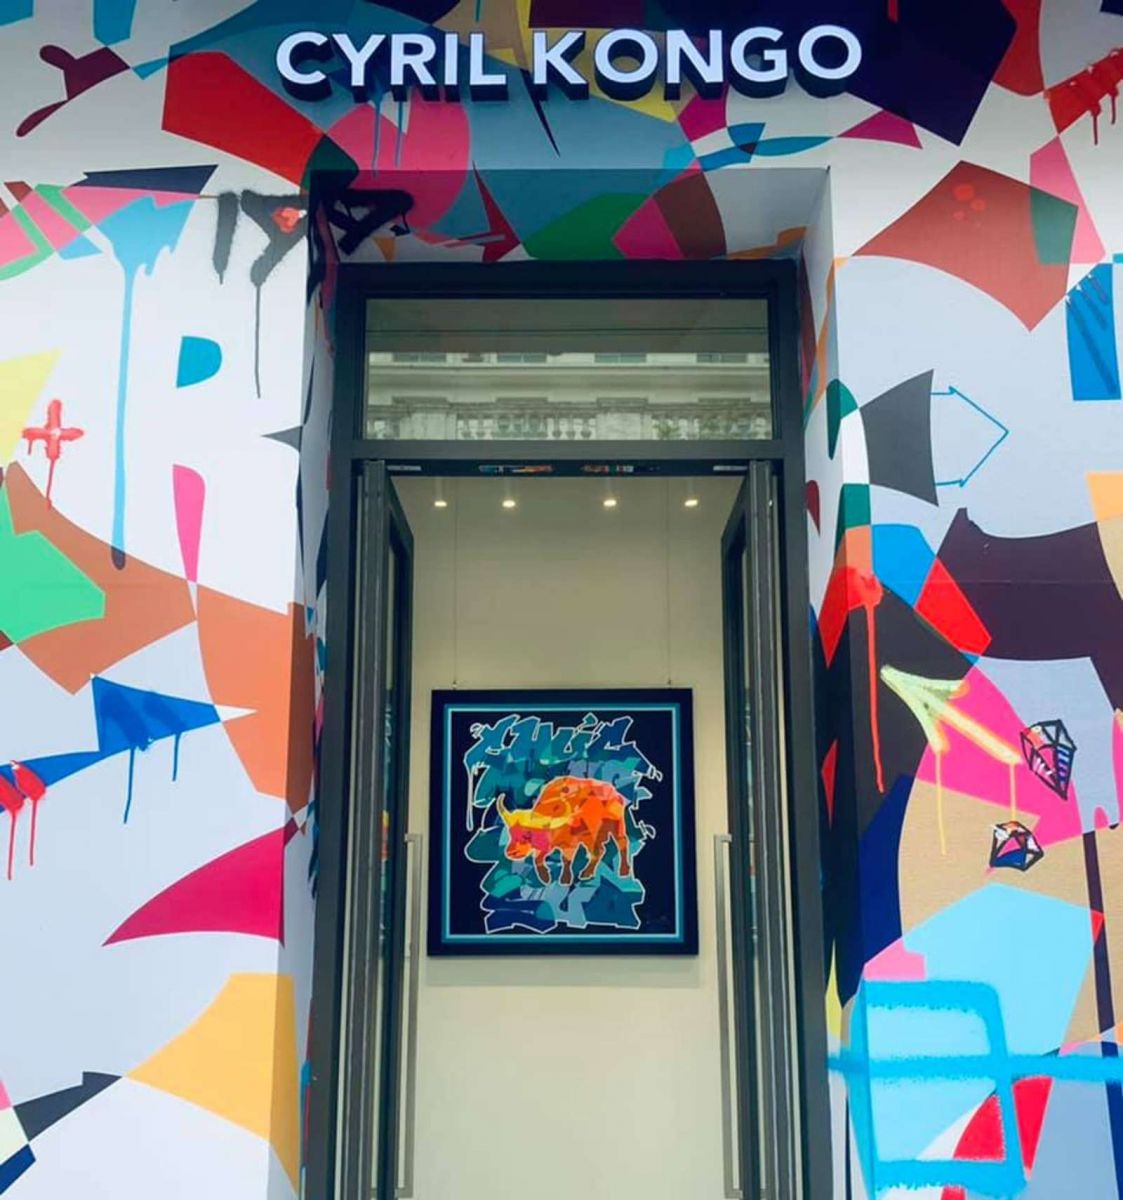 Cyril Kongo Vietnam Gallery, Tân Sửu 2021, Tết 2021